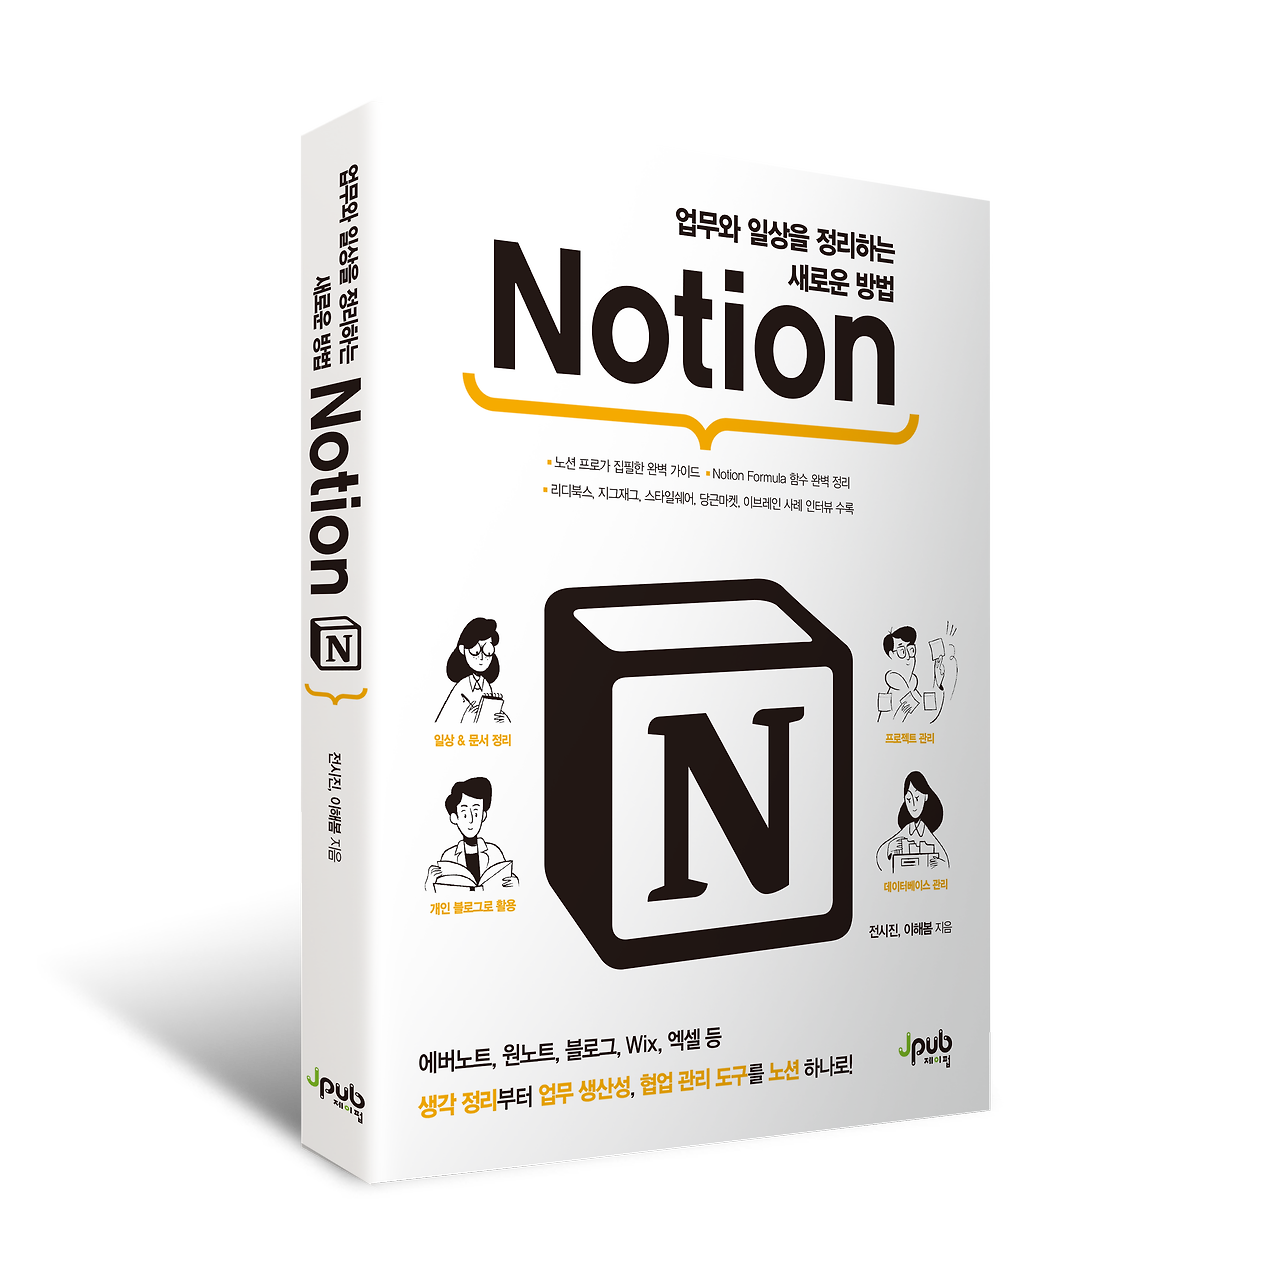 Notion. Notion (приложение). Ежедневник notion. Логотип notion. Ноушен вход